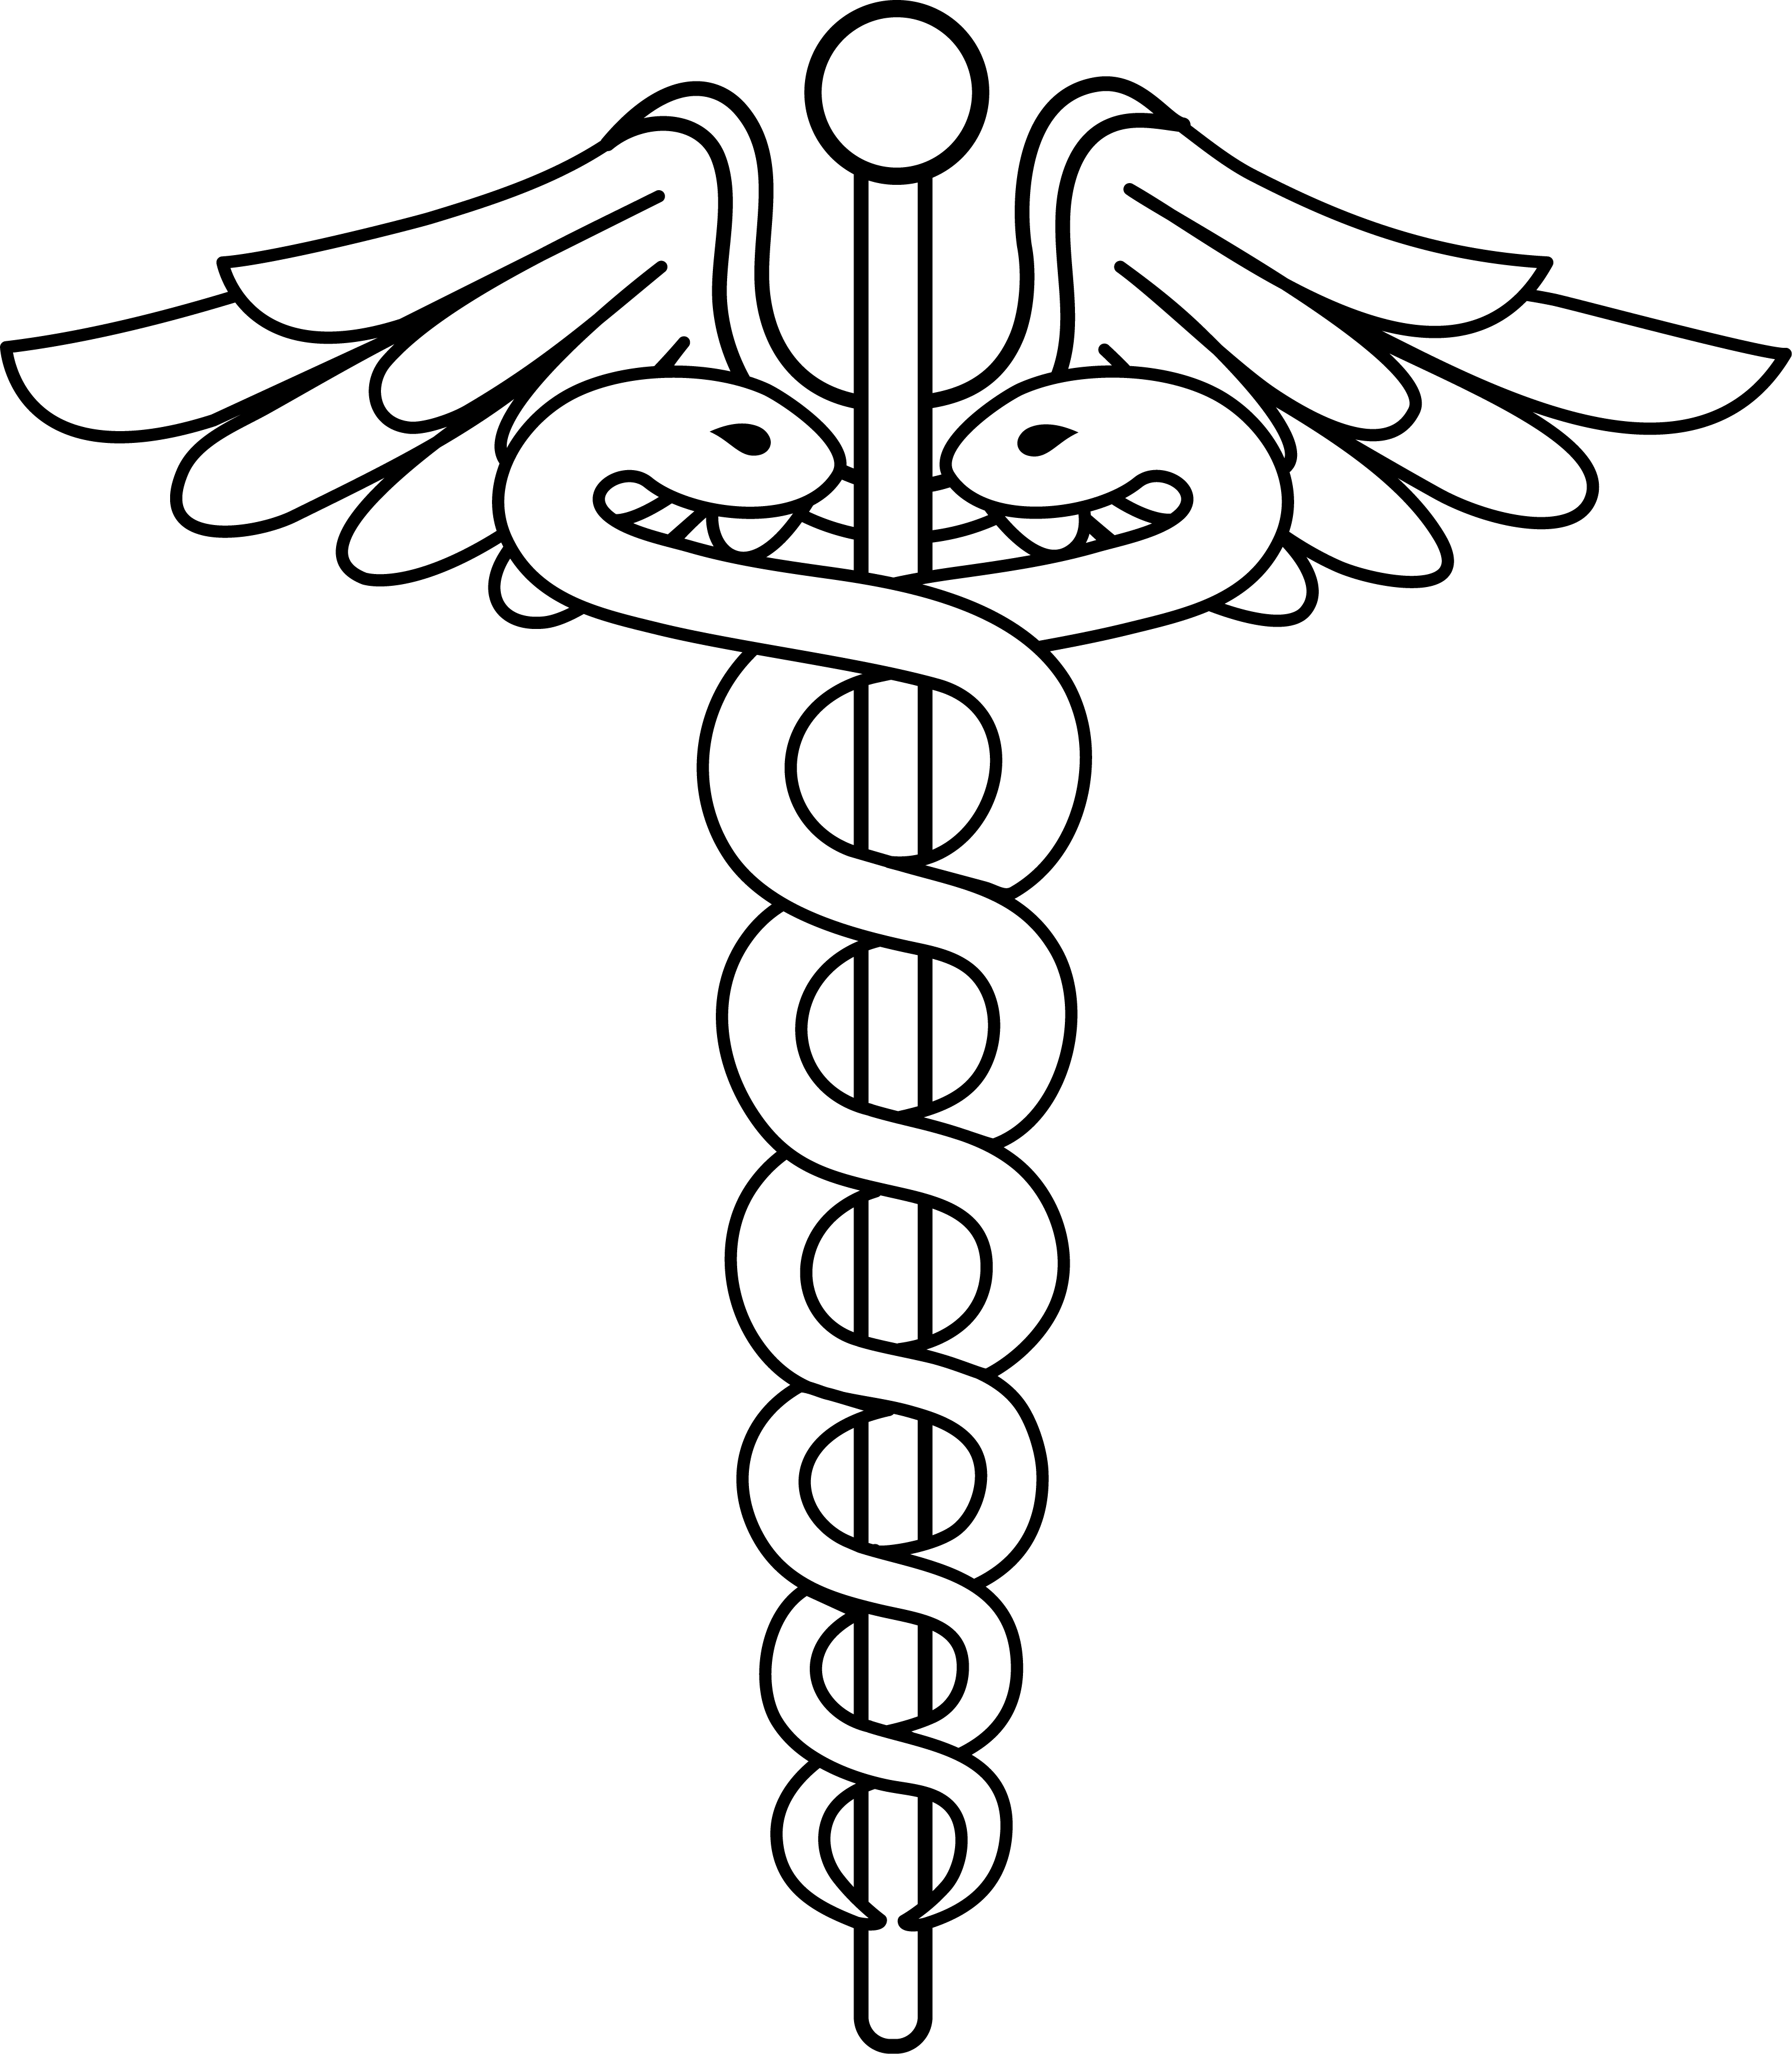 Caduceus Png Image #30295. Doctor Symbol Hdpng.com  - Doctor Symbol, Transparent background PNG HD thumbnail